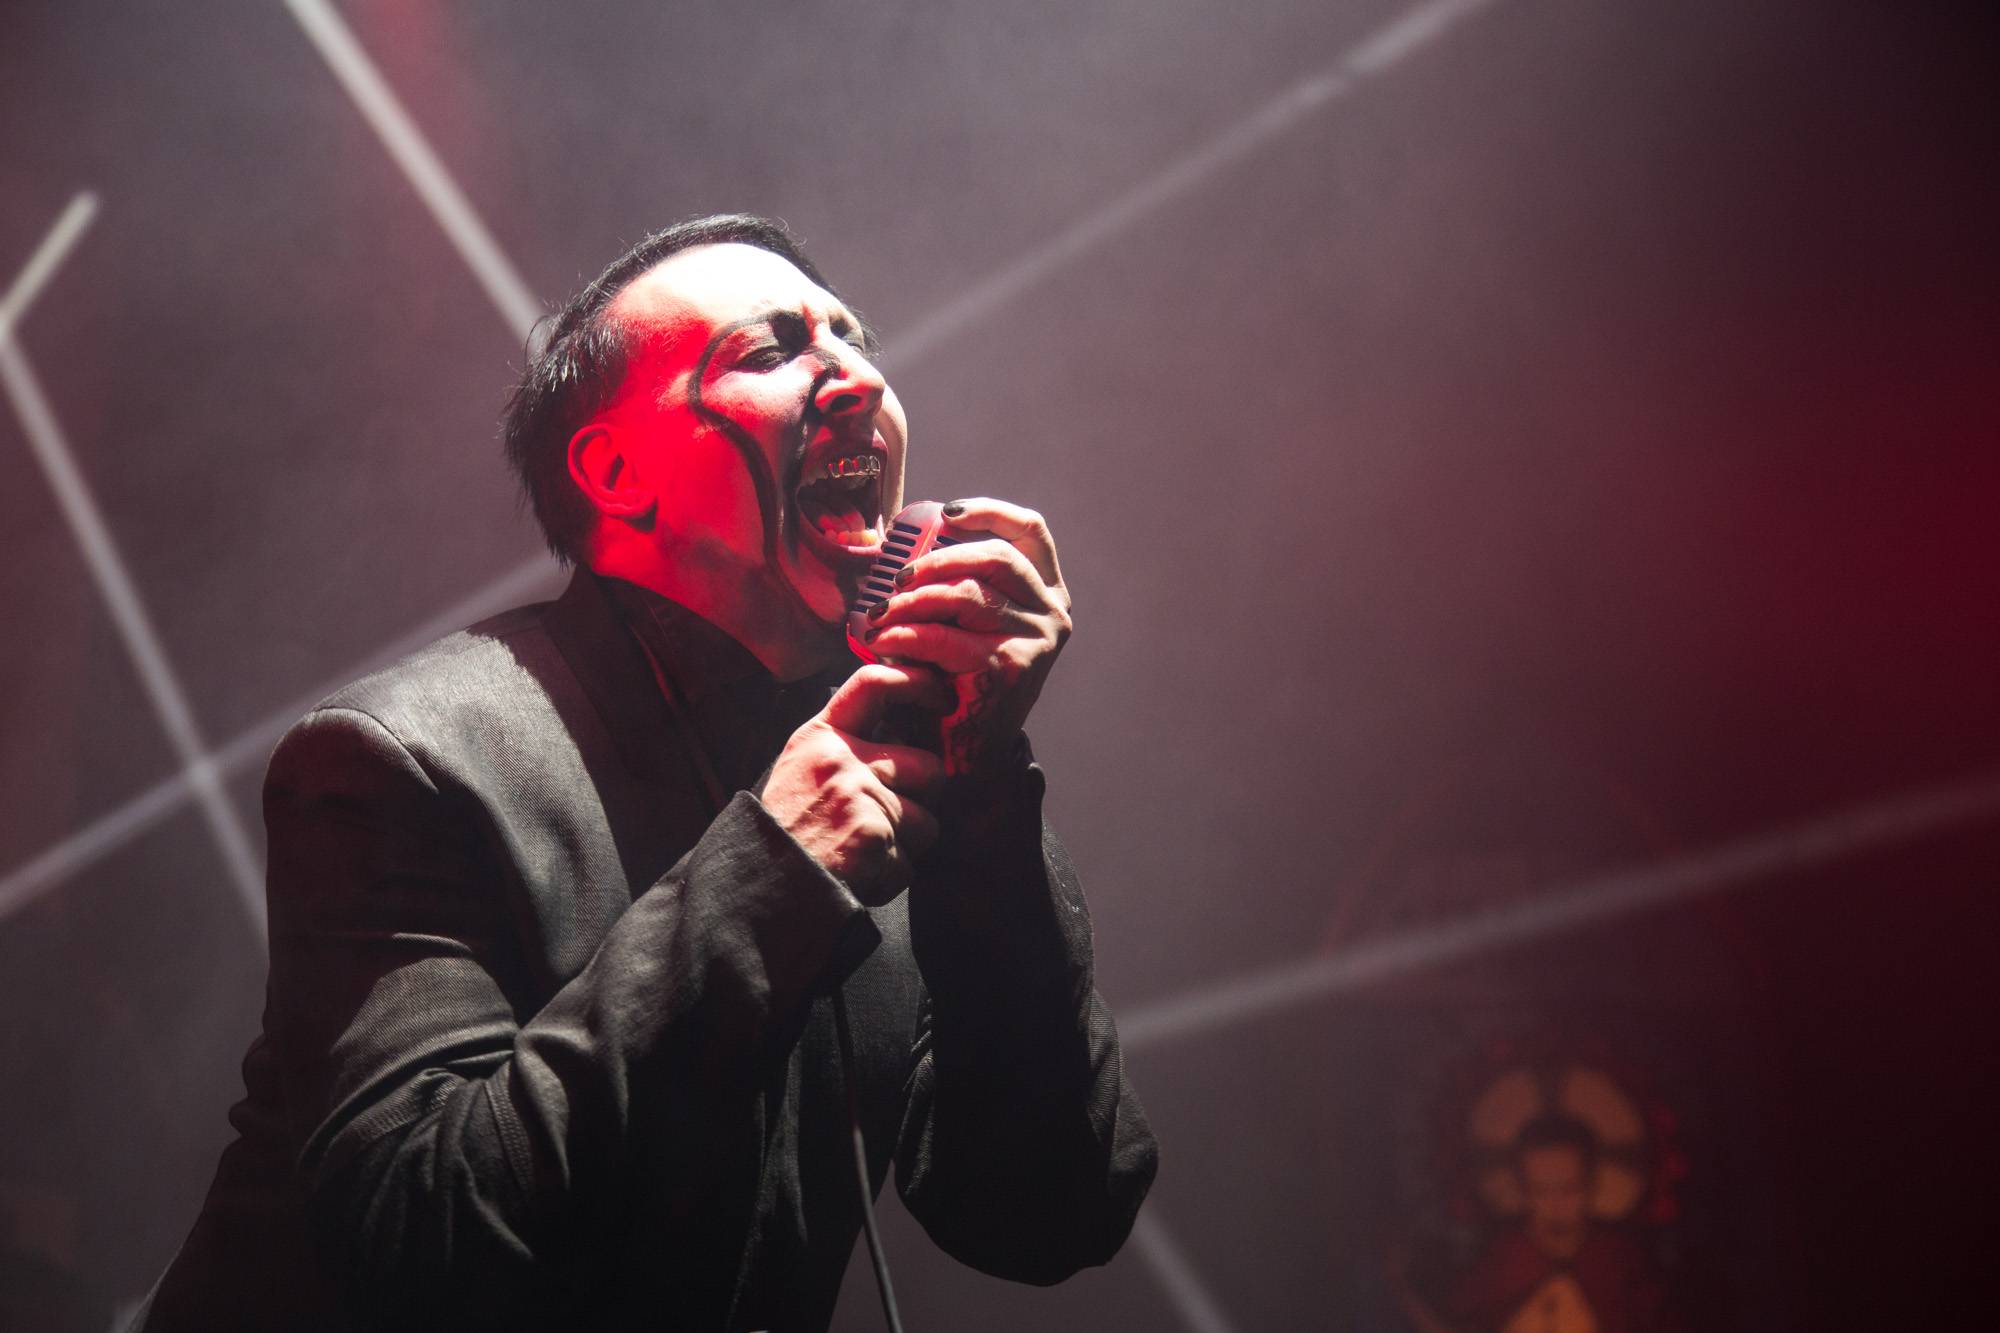 Marilyn Manson at the Queen Elizabeth Theatre, Vancouver, Mar. 29 2015. Kirk Chantraine photo.